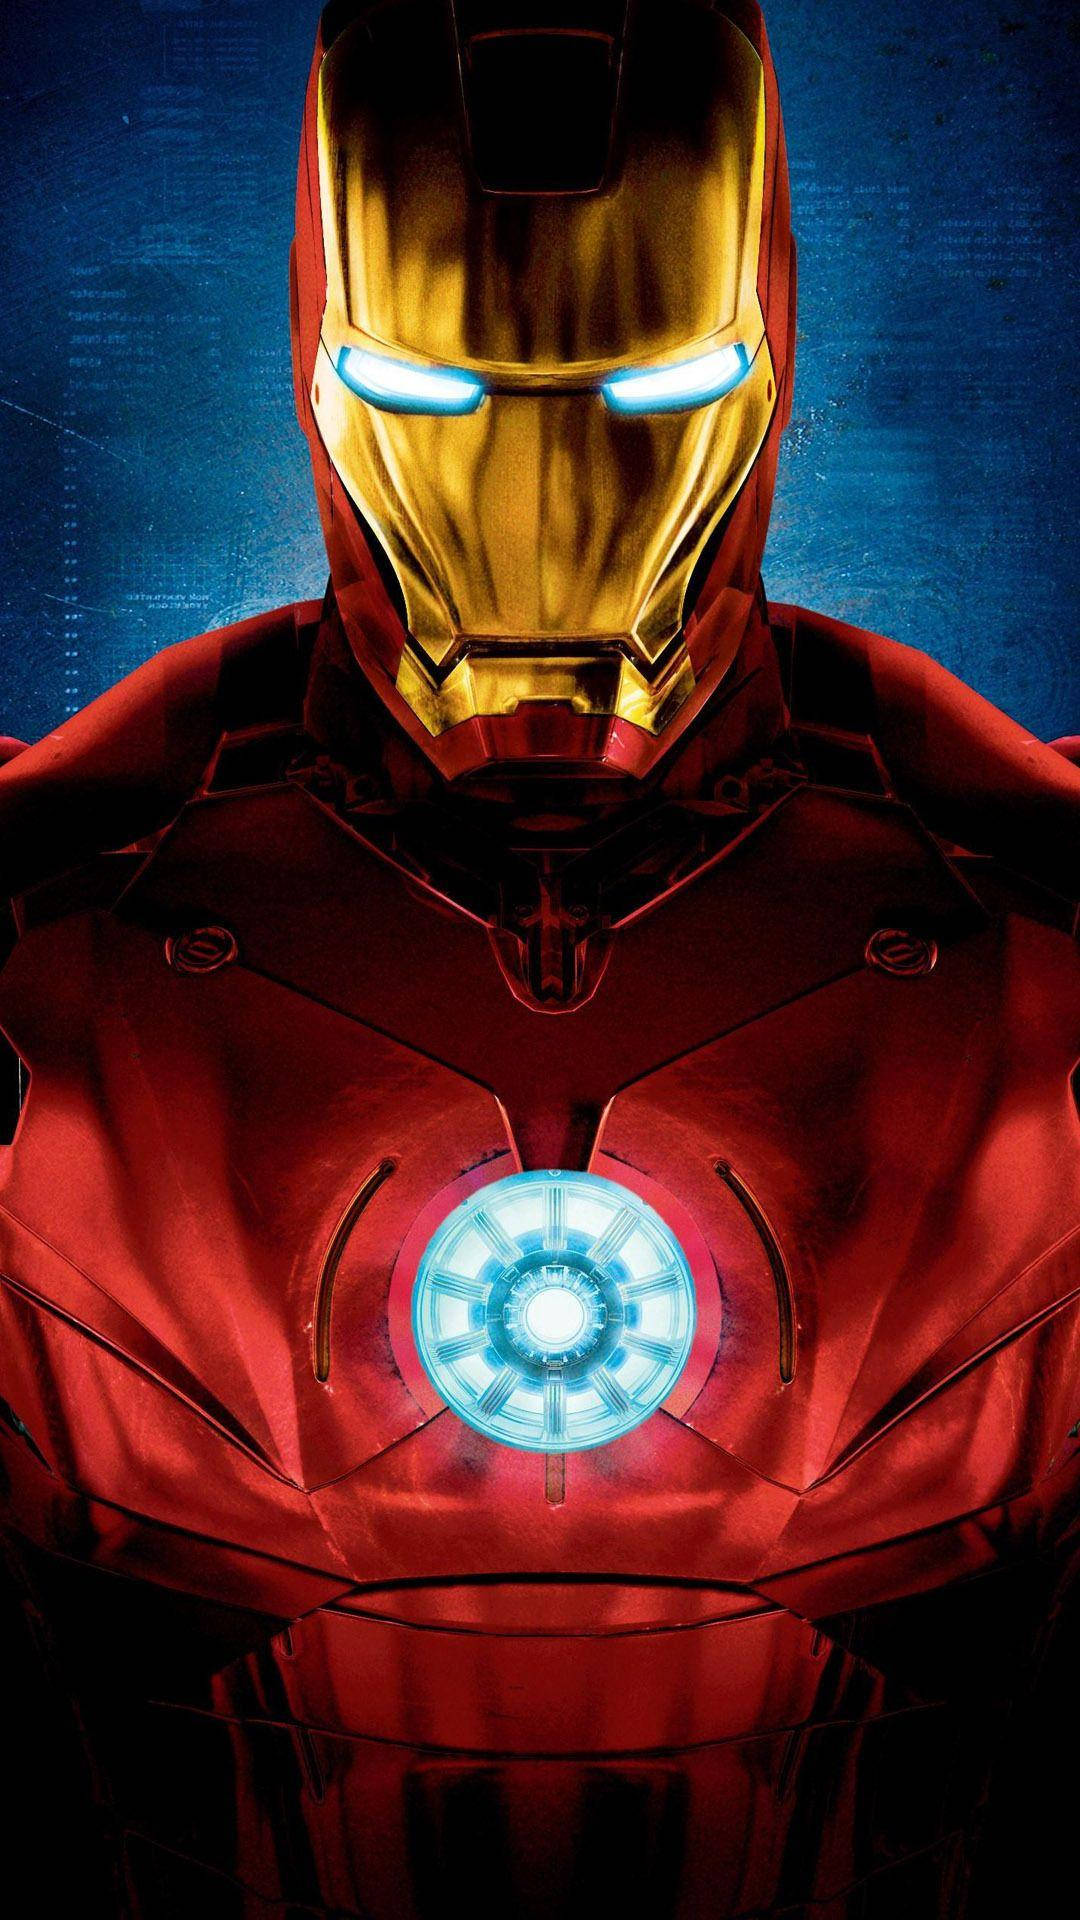 1080p Hd Iron Man Mobile Background